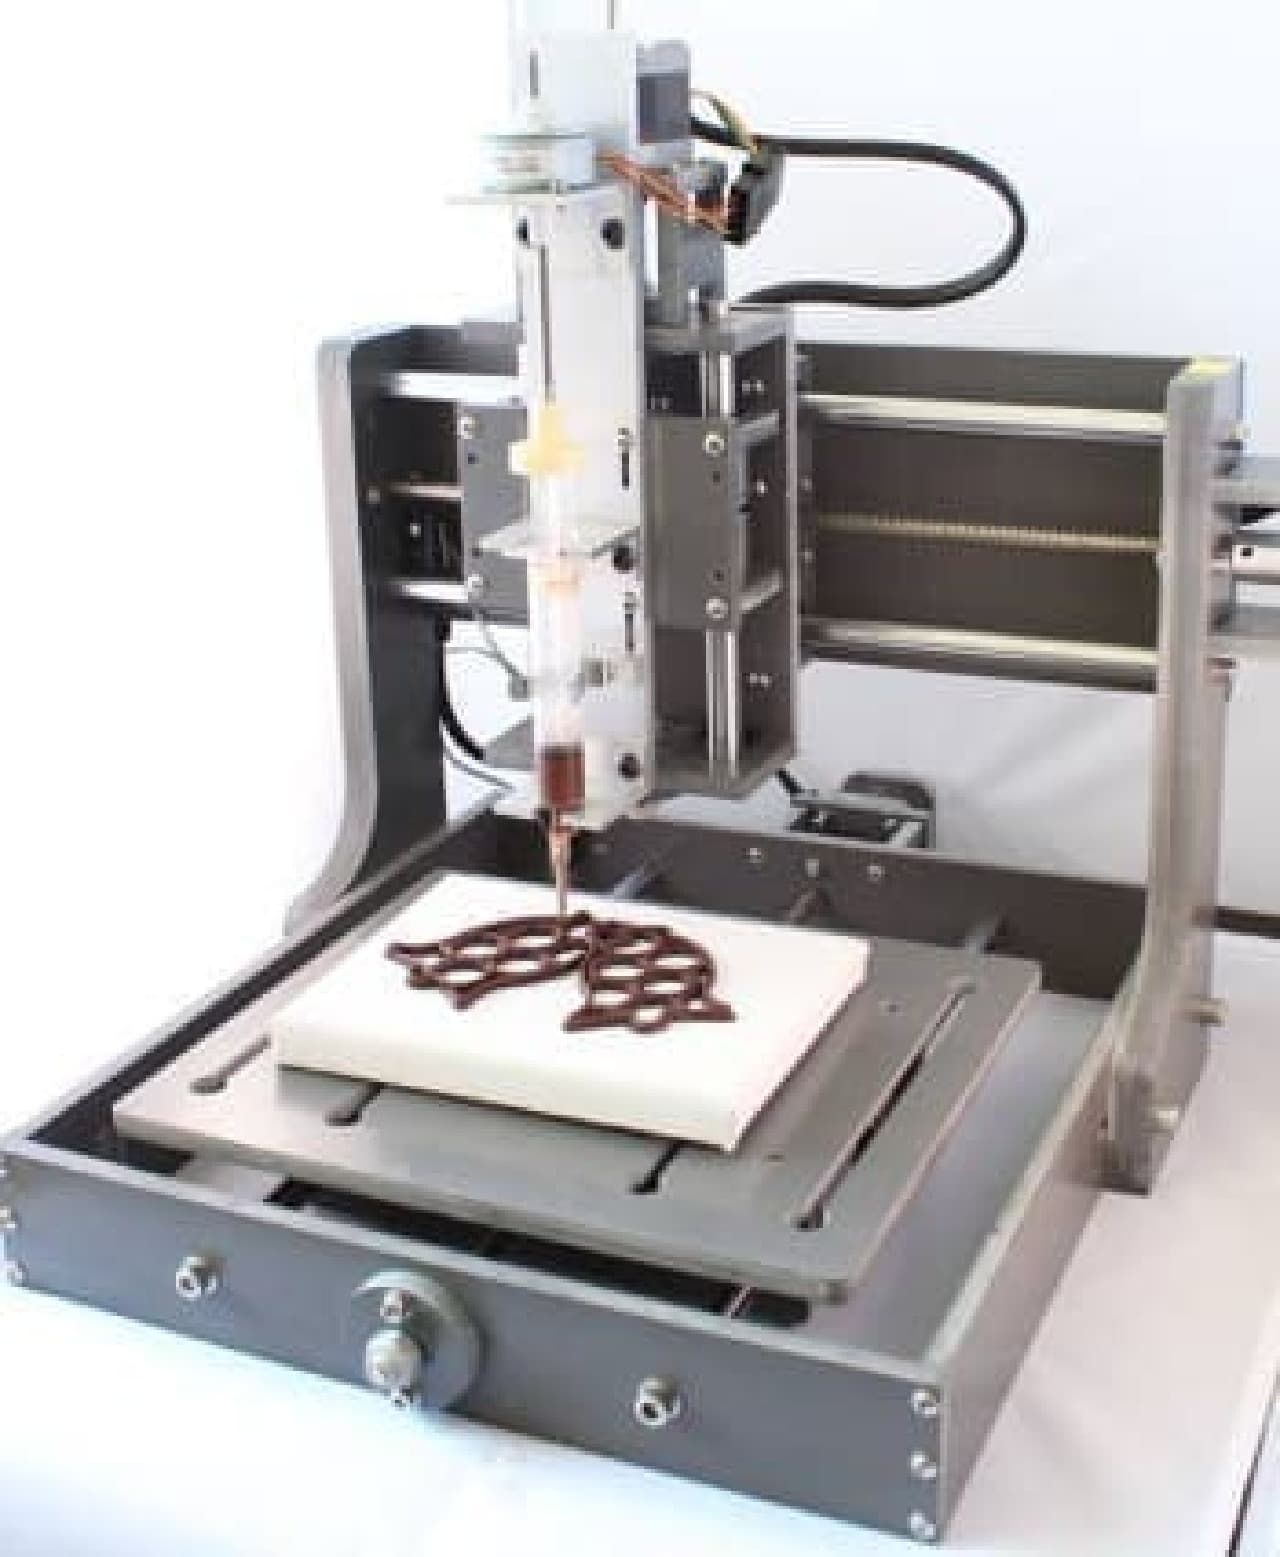 world's first! 3D chocolate printer (Source: Choc Edge homepage)